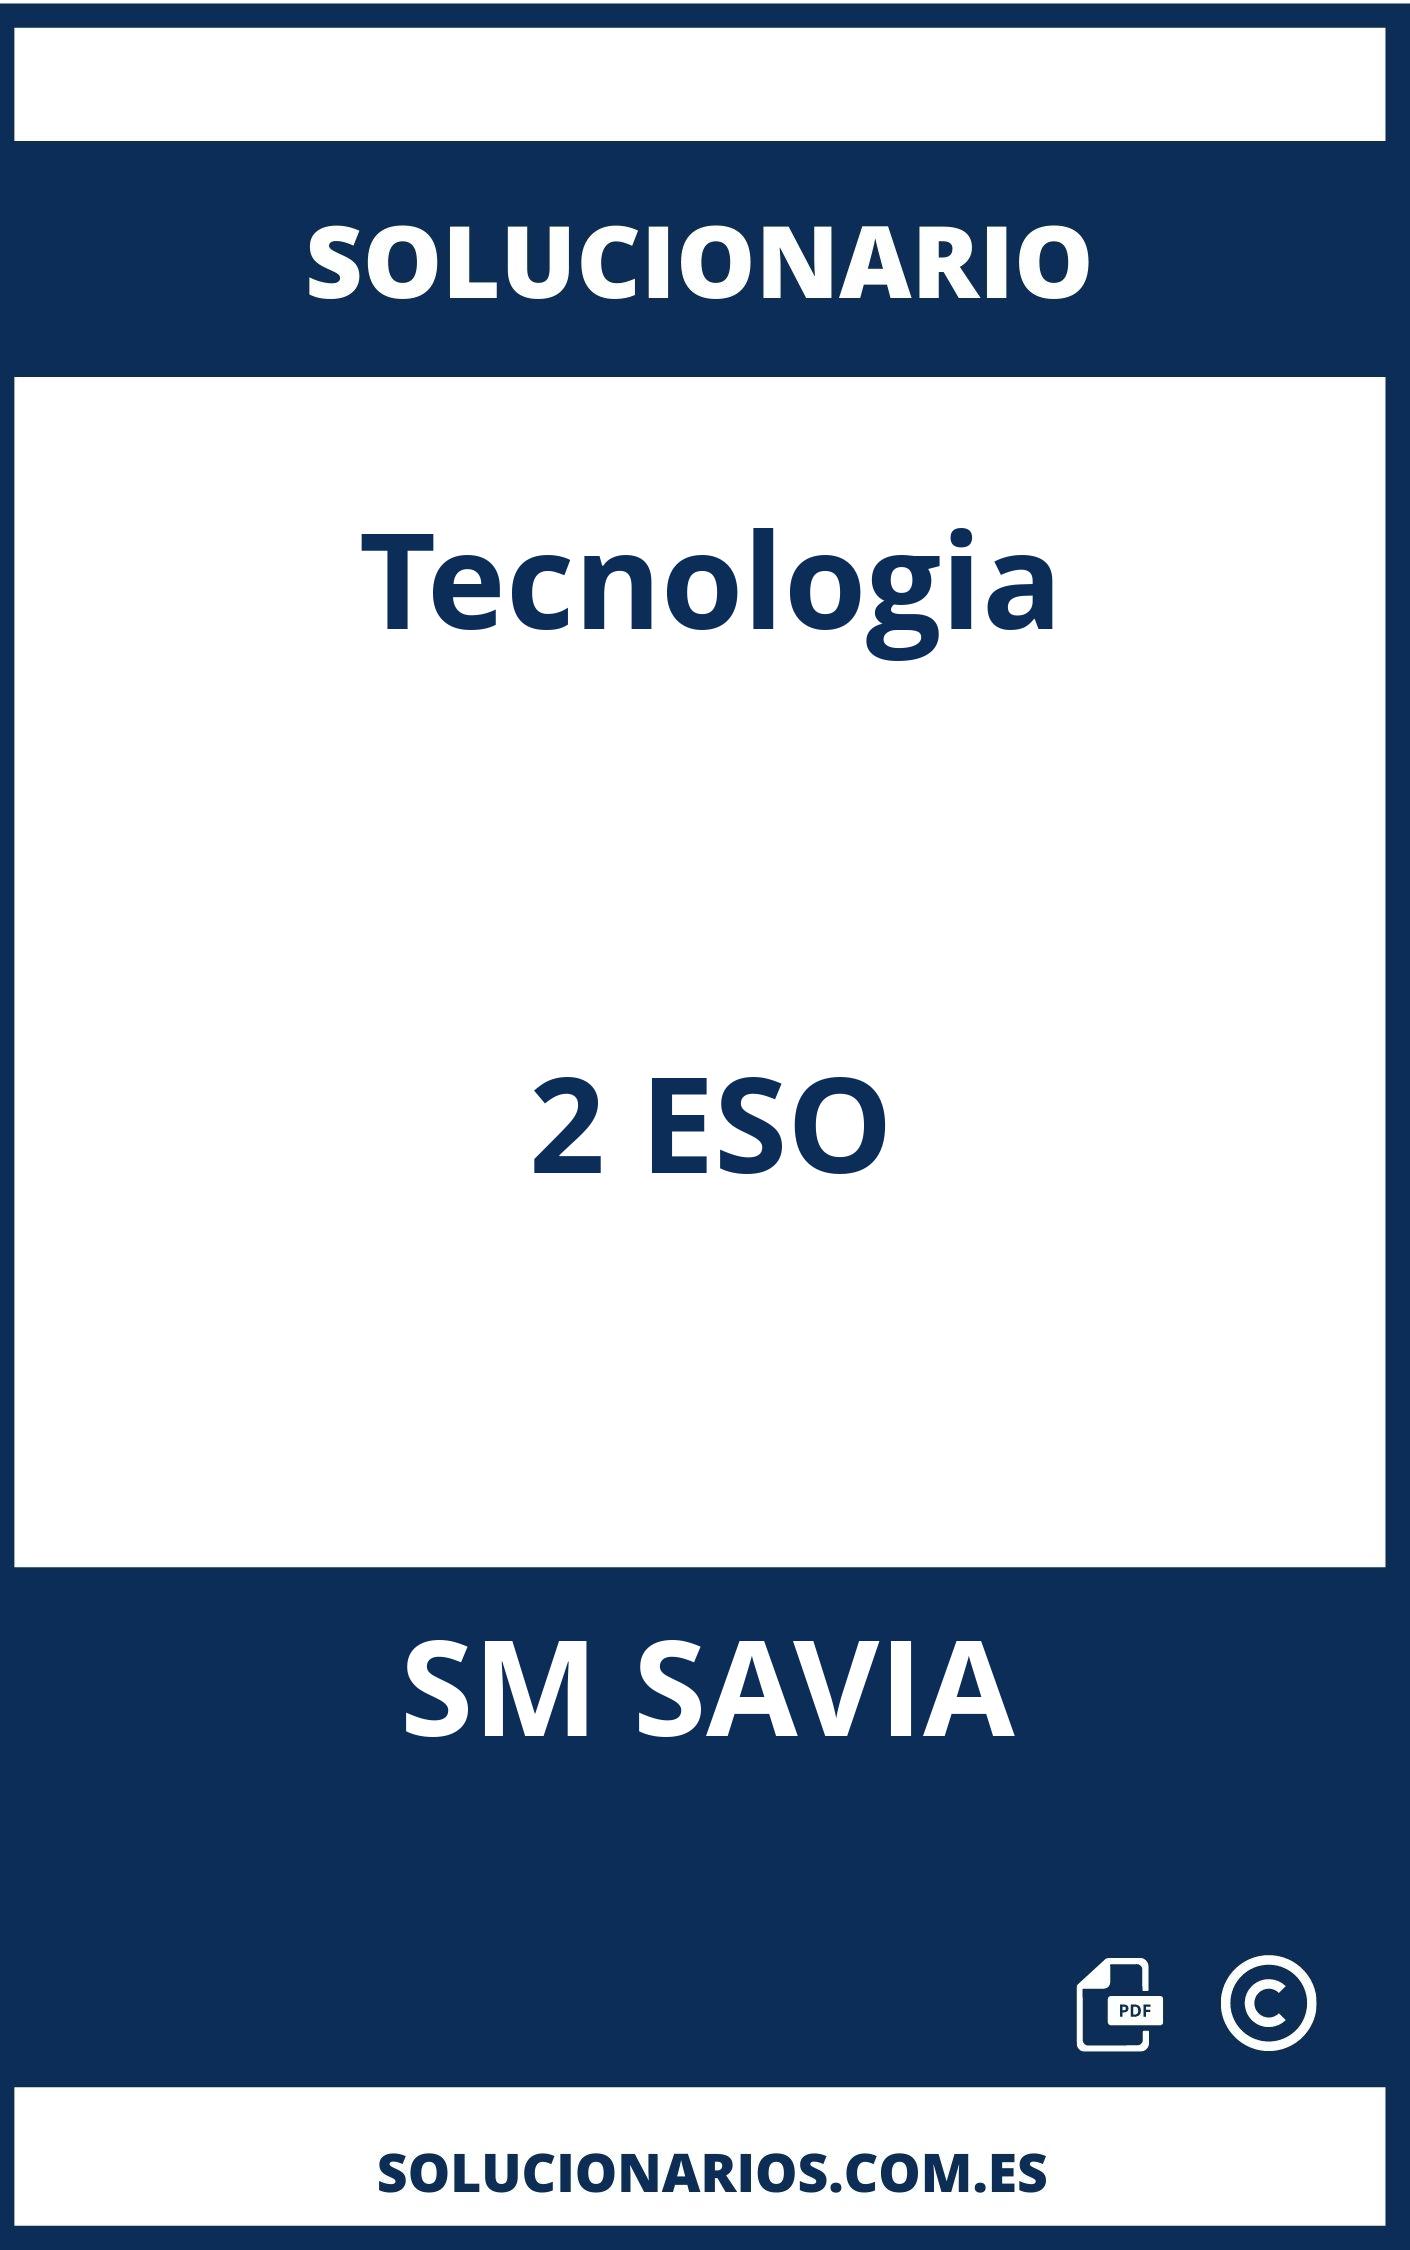 Solucionario Tecnologia 2 ESO SM SAVIA